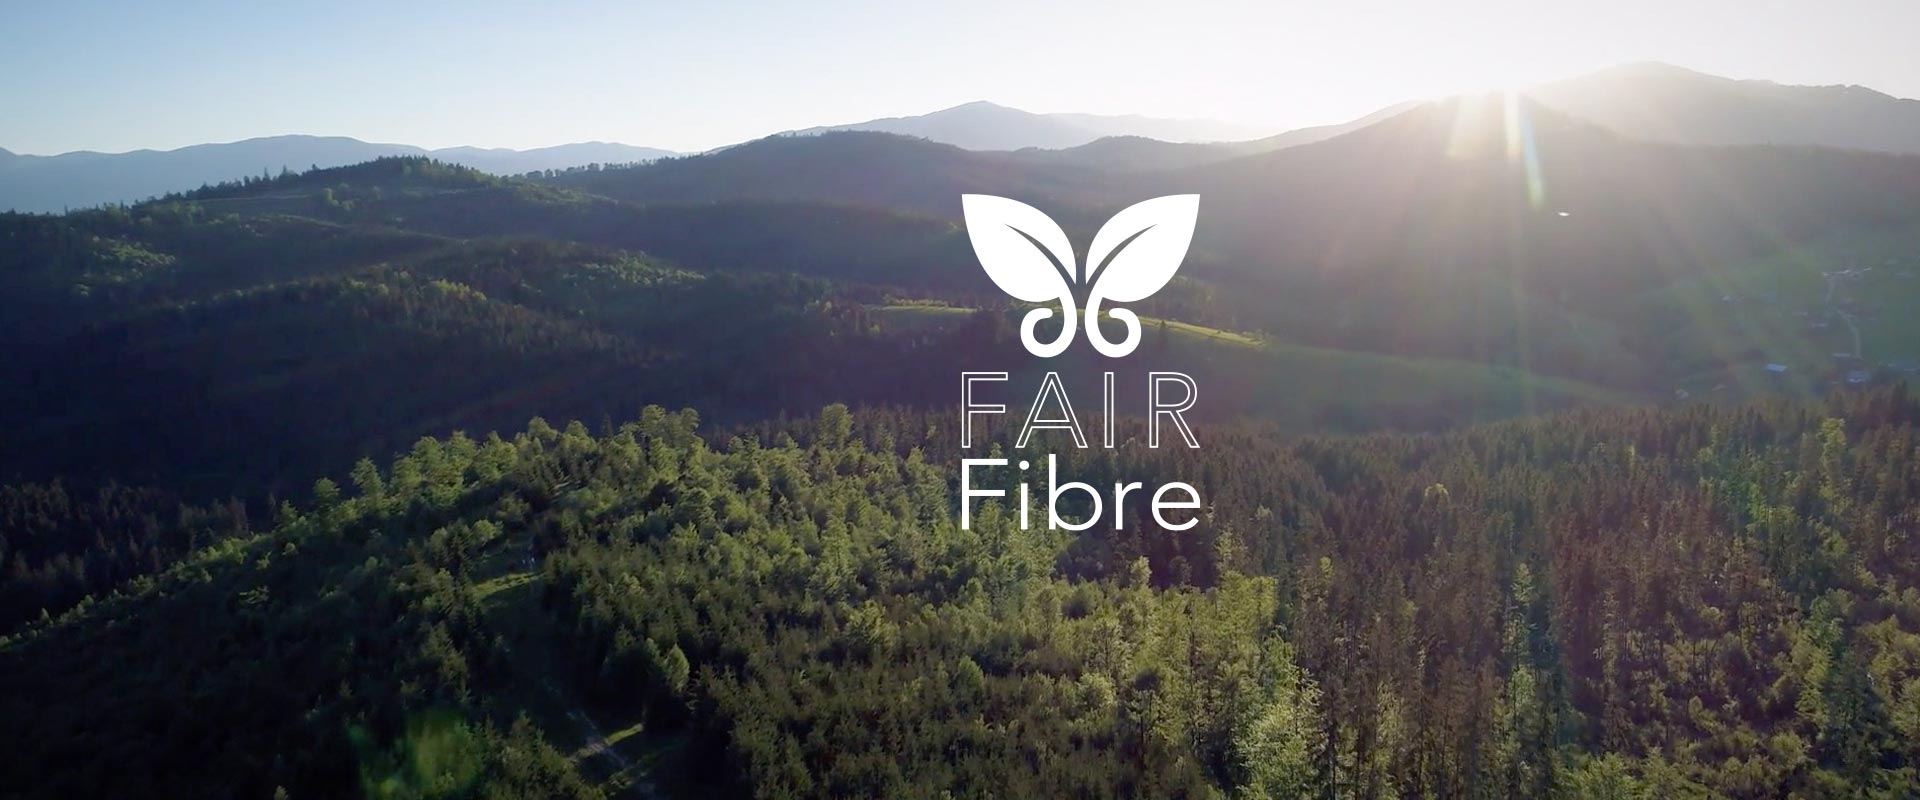 WEPA UK introduces Hybrid Fair Fibre in latest sustainability drive